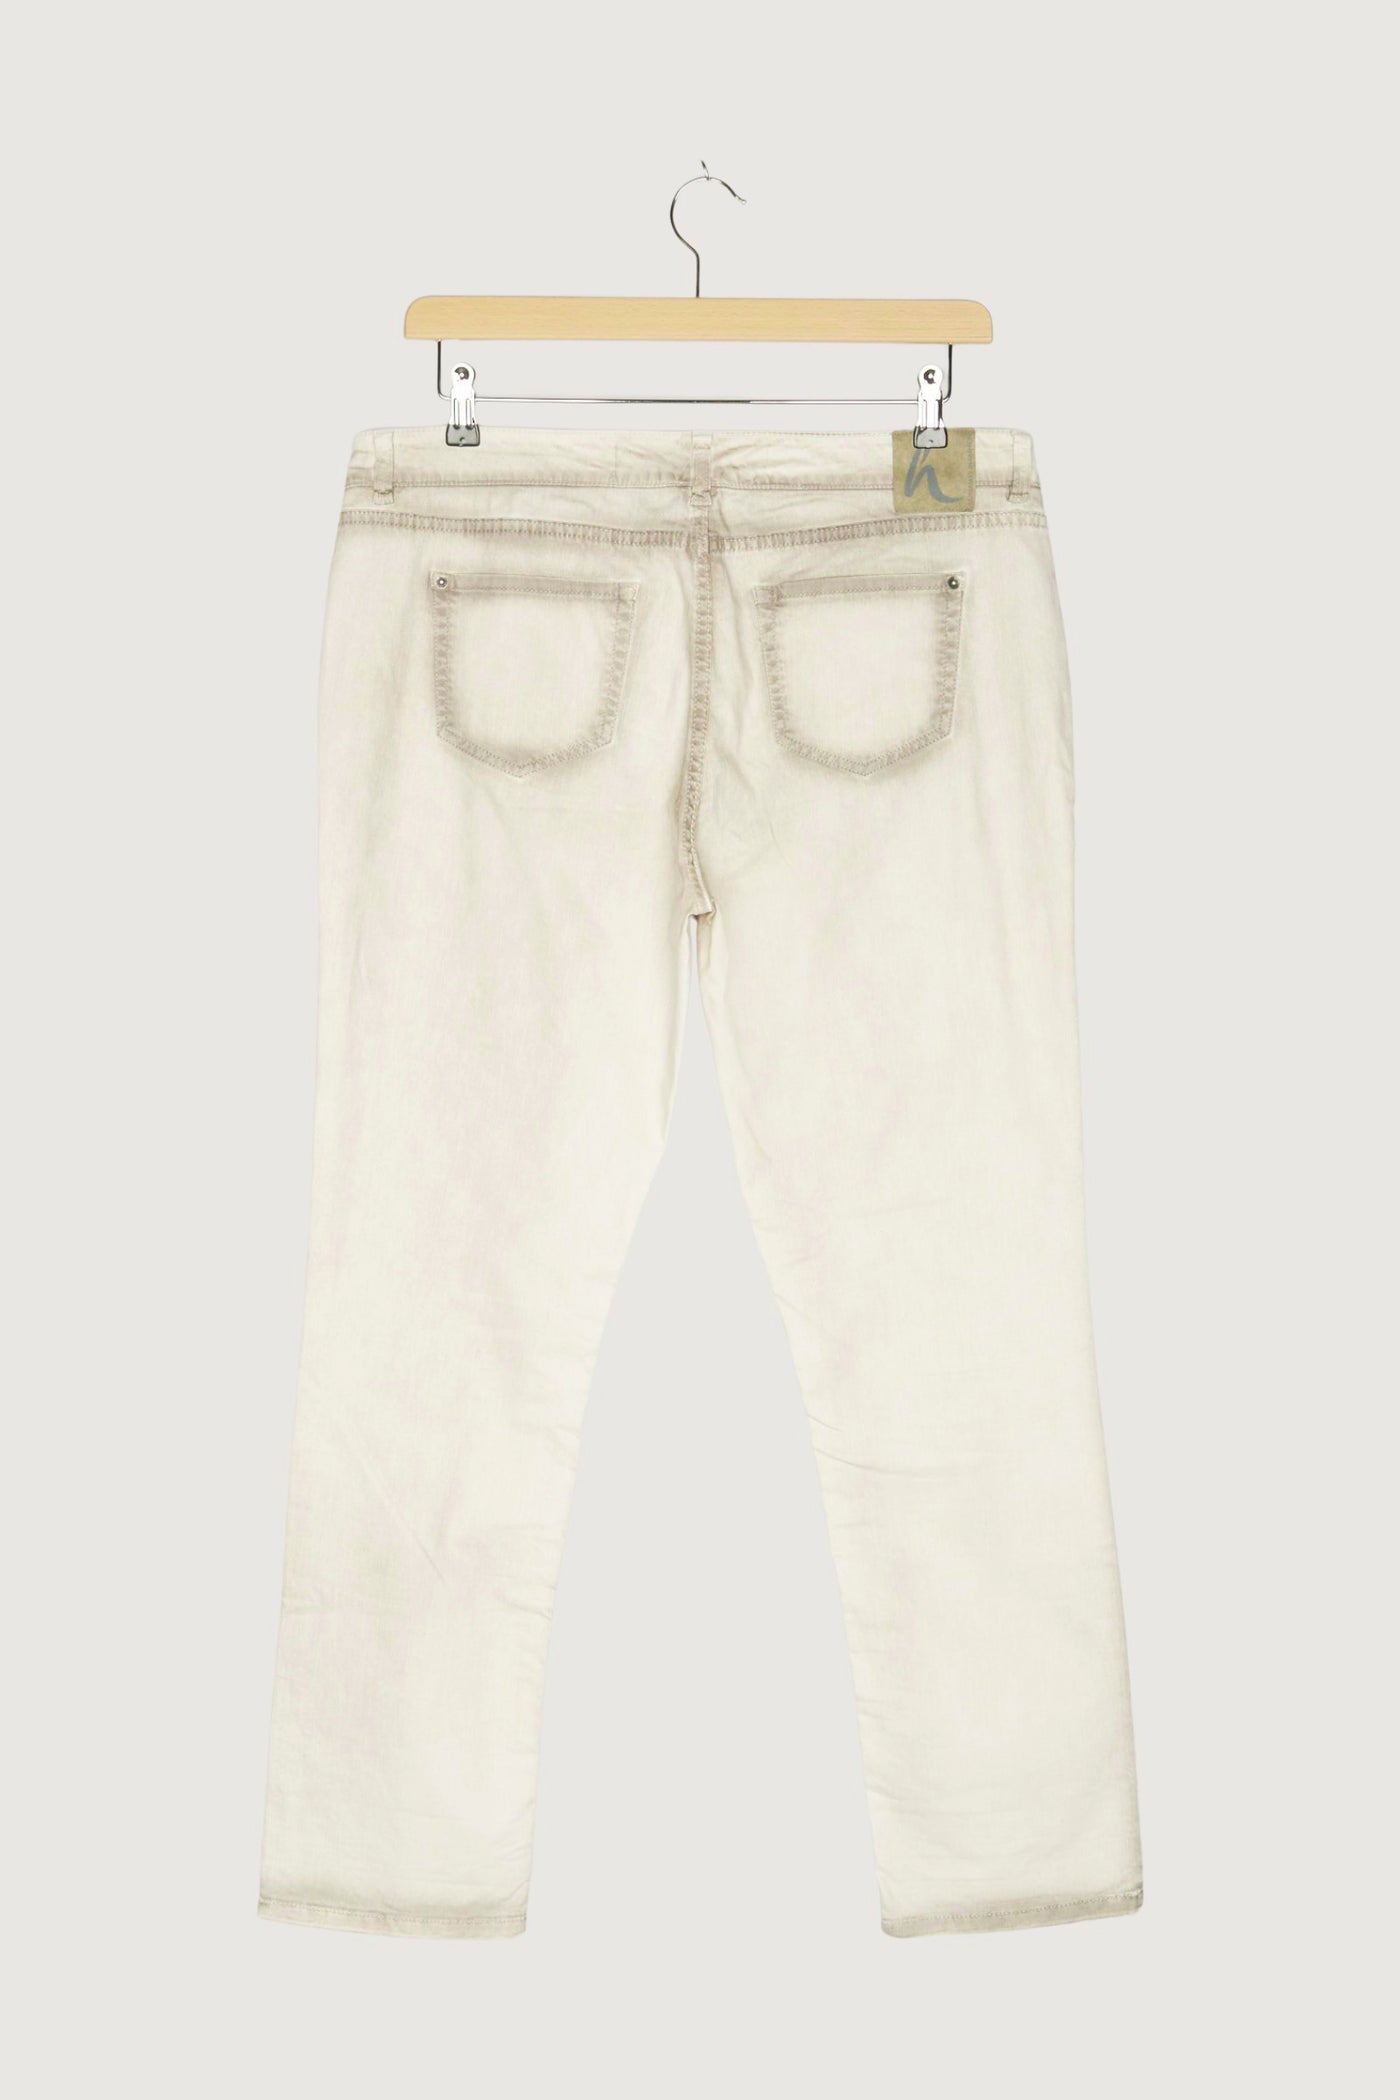 Secondhand hessnatur Jeans